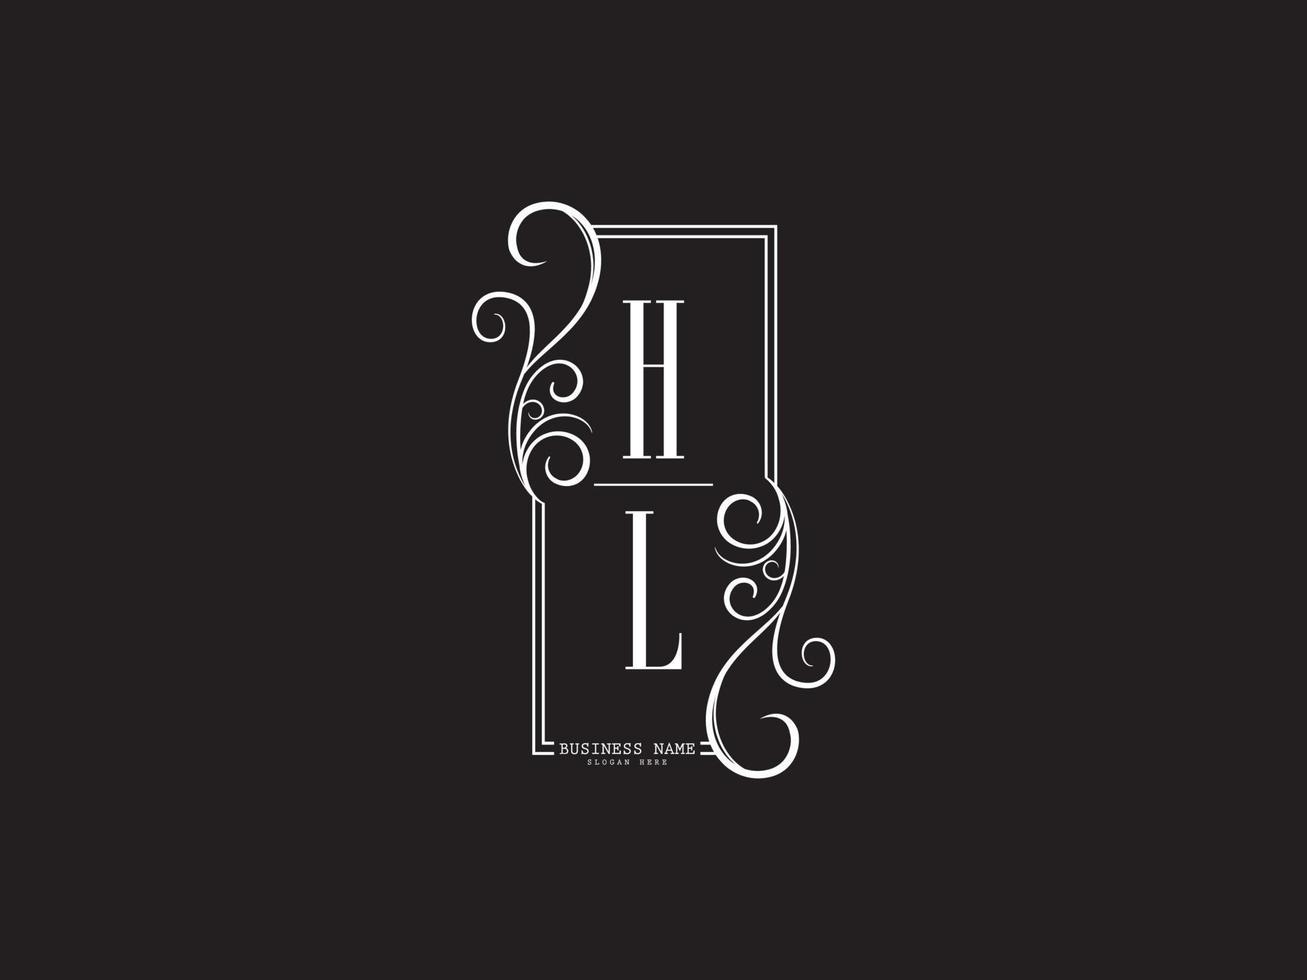 design de imagem vetorial de carta de logotipo de luxo minimalista hl lh vetor